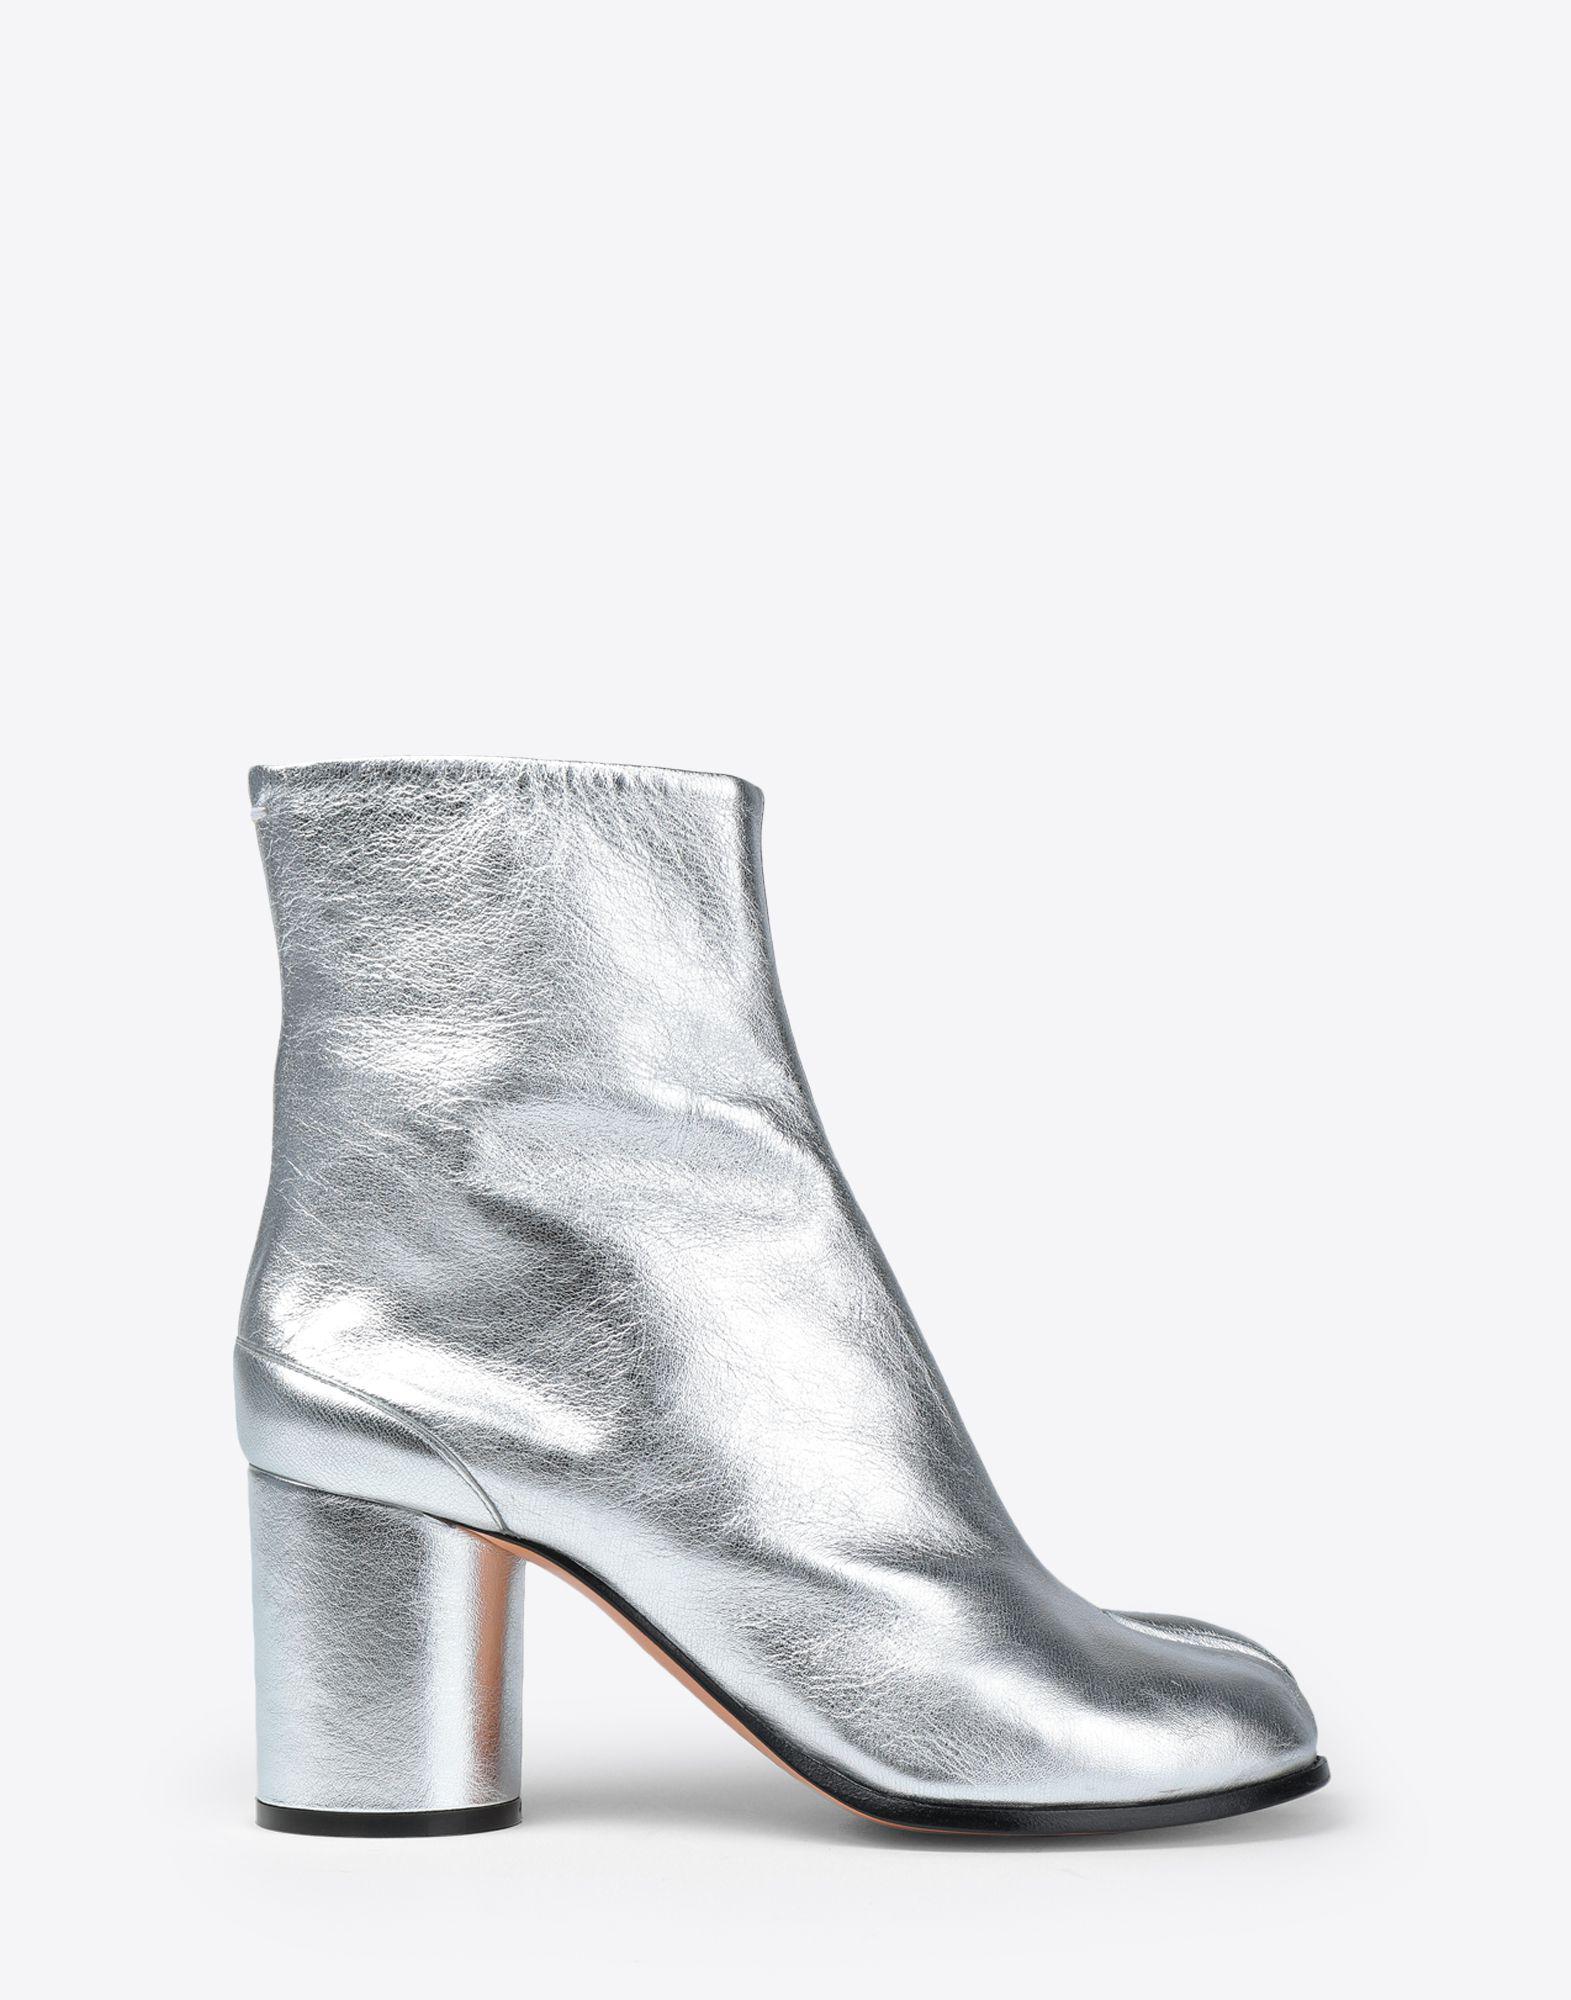 Maison Margiela Leather Silver Tabi Boots in Metallic - Lyst